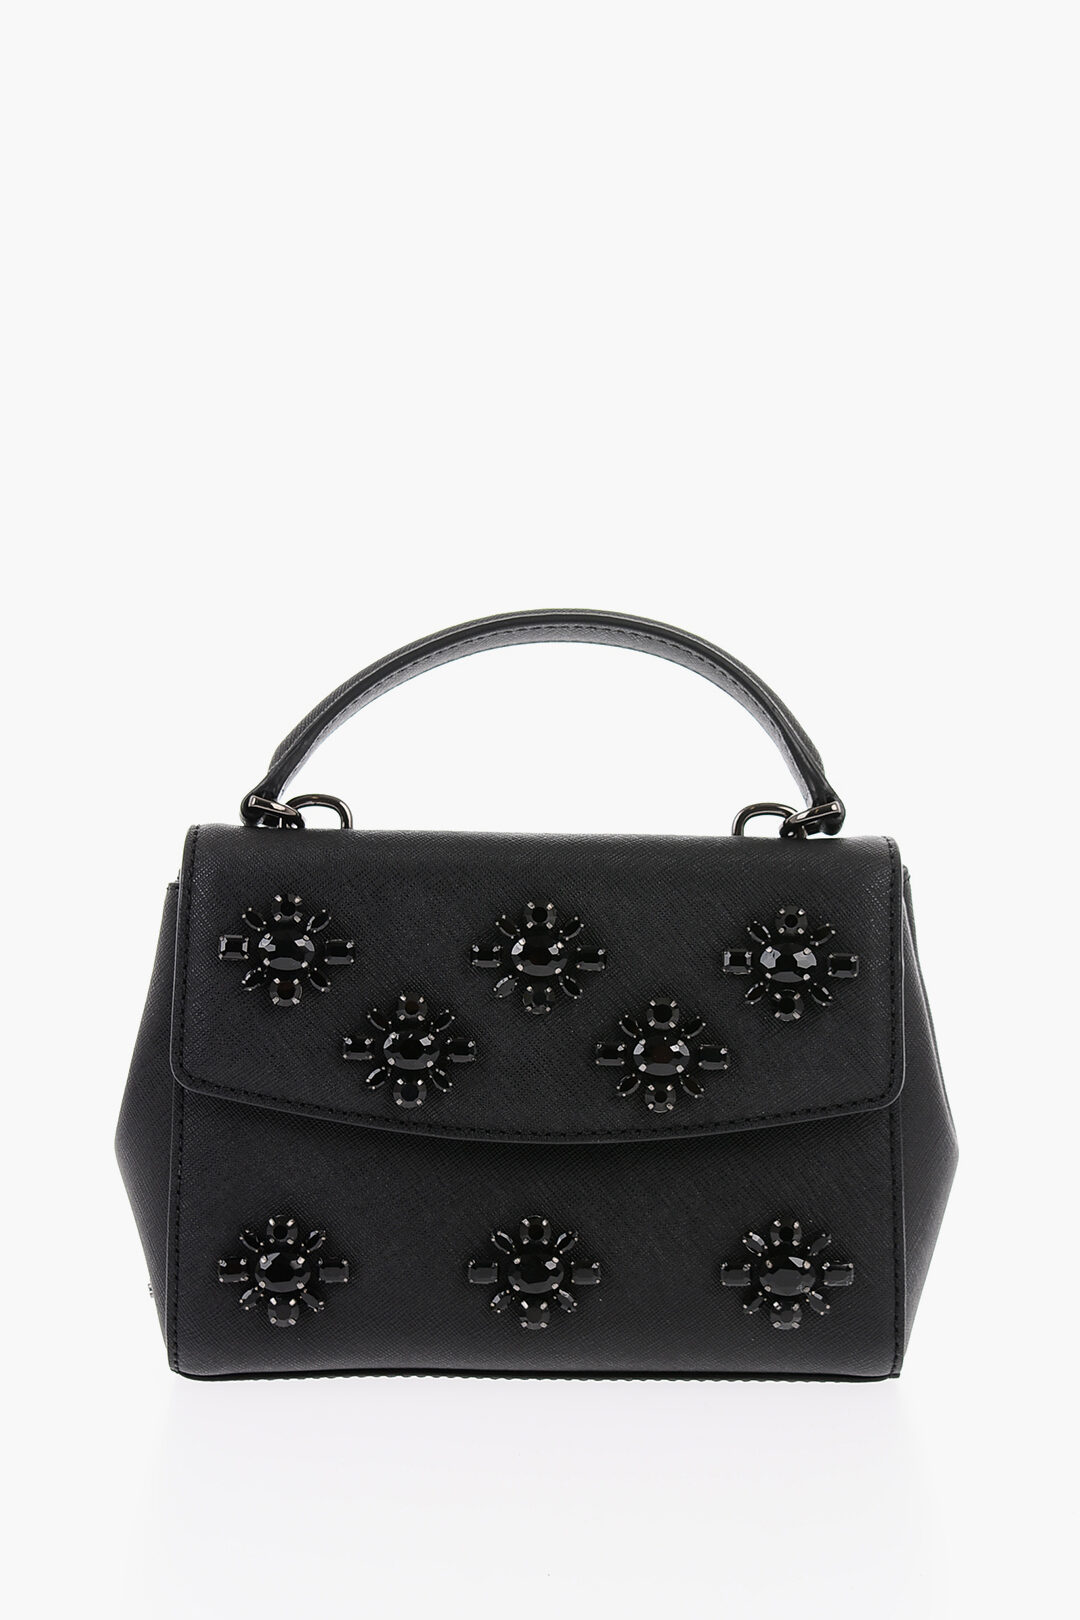 Michael Kors Leather AVA JEWEL Crossbody Bag women - Glamood Outlet